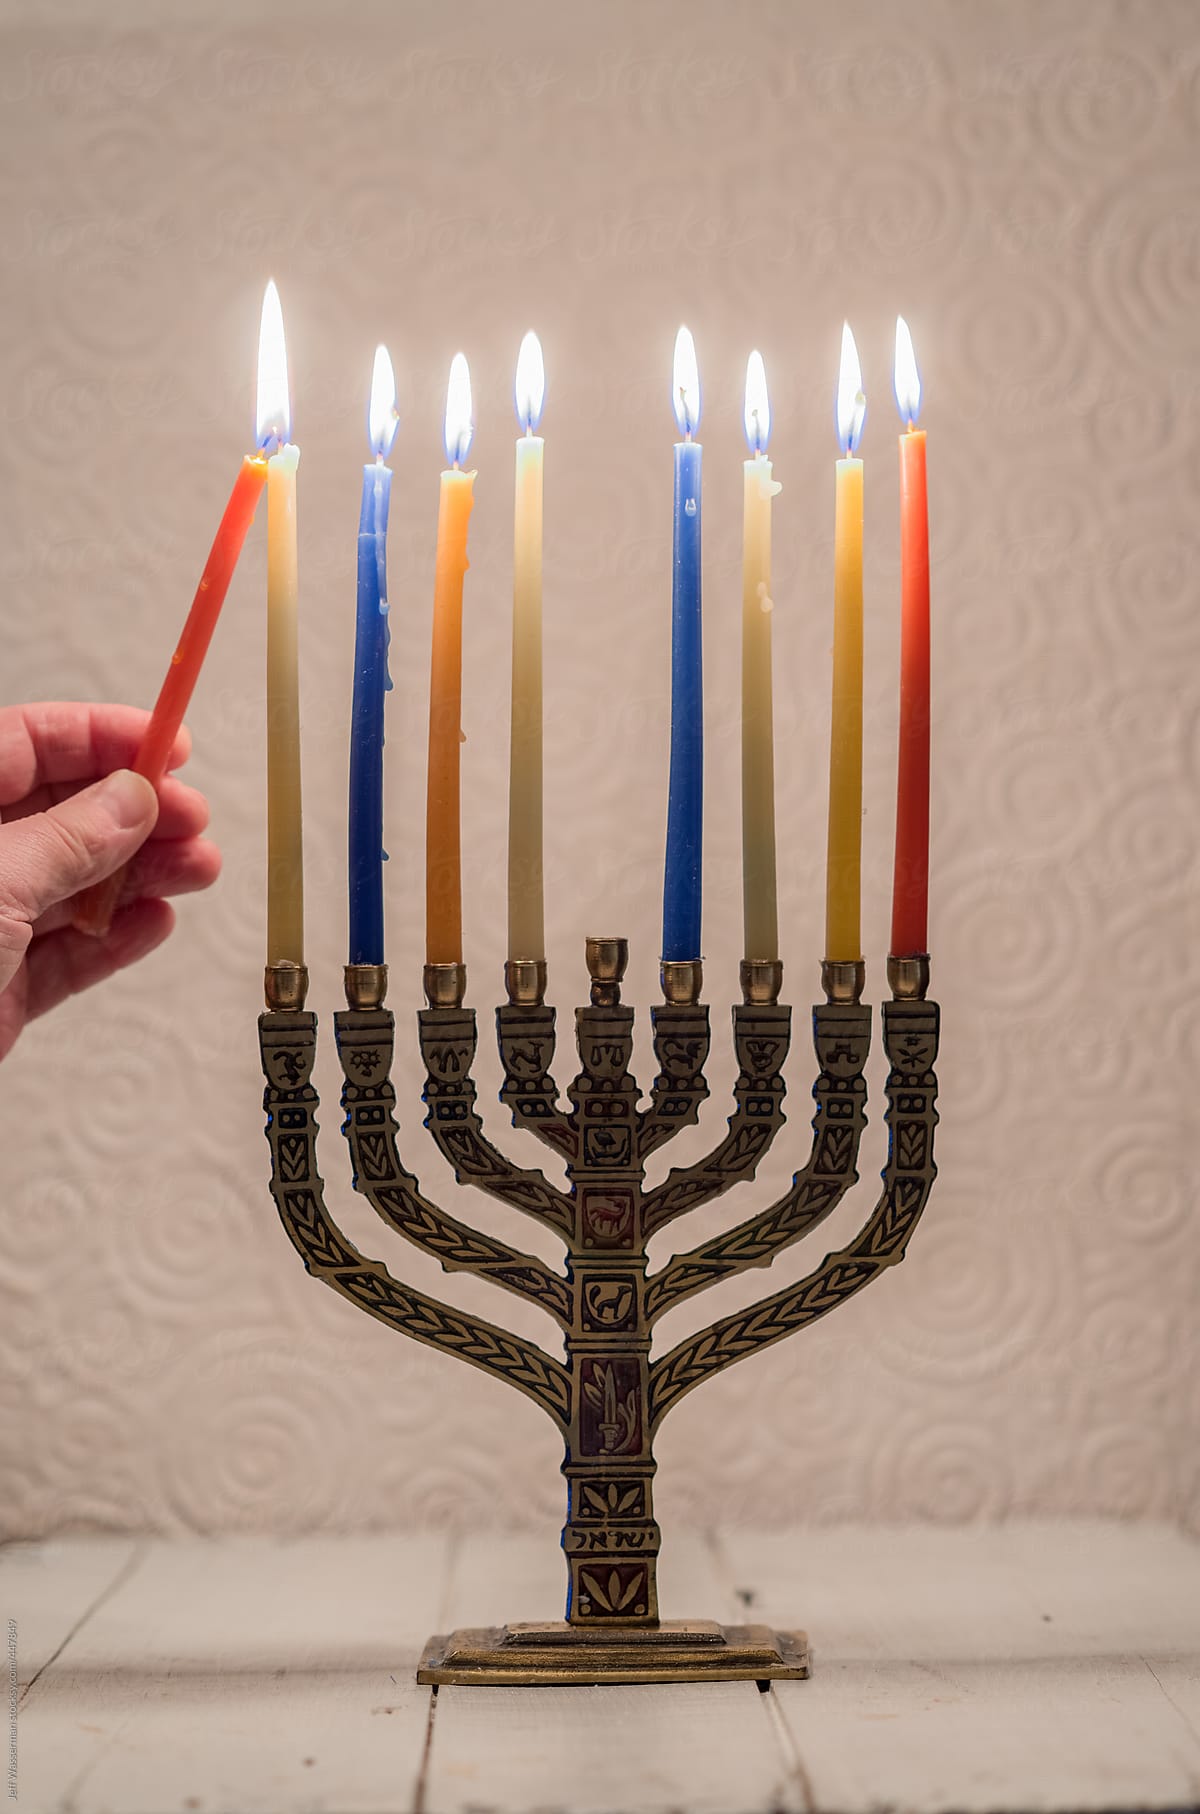 Lighting the Hanuakkah Menorah